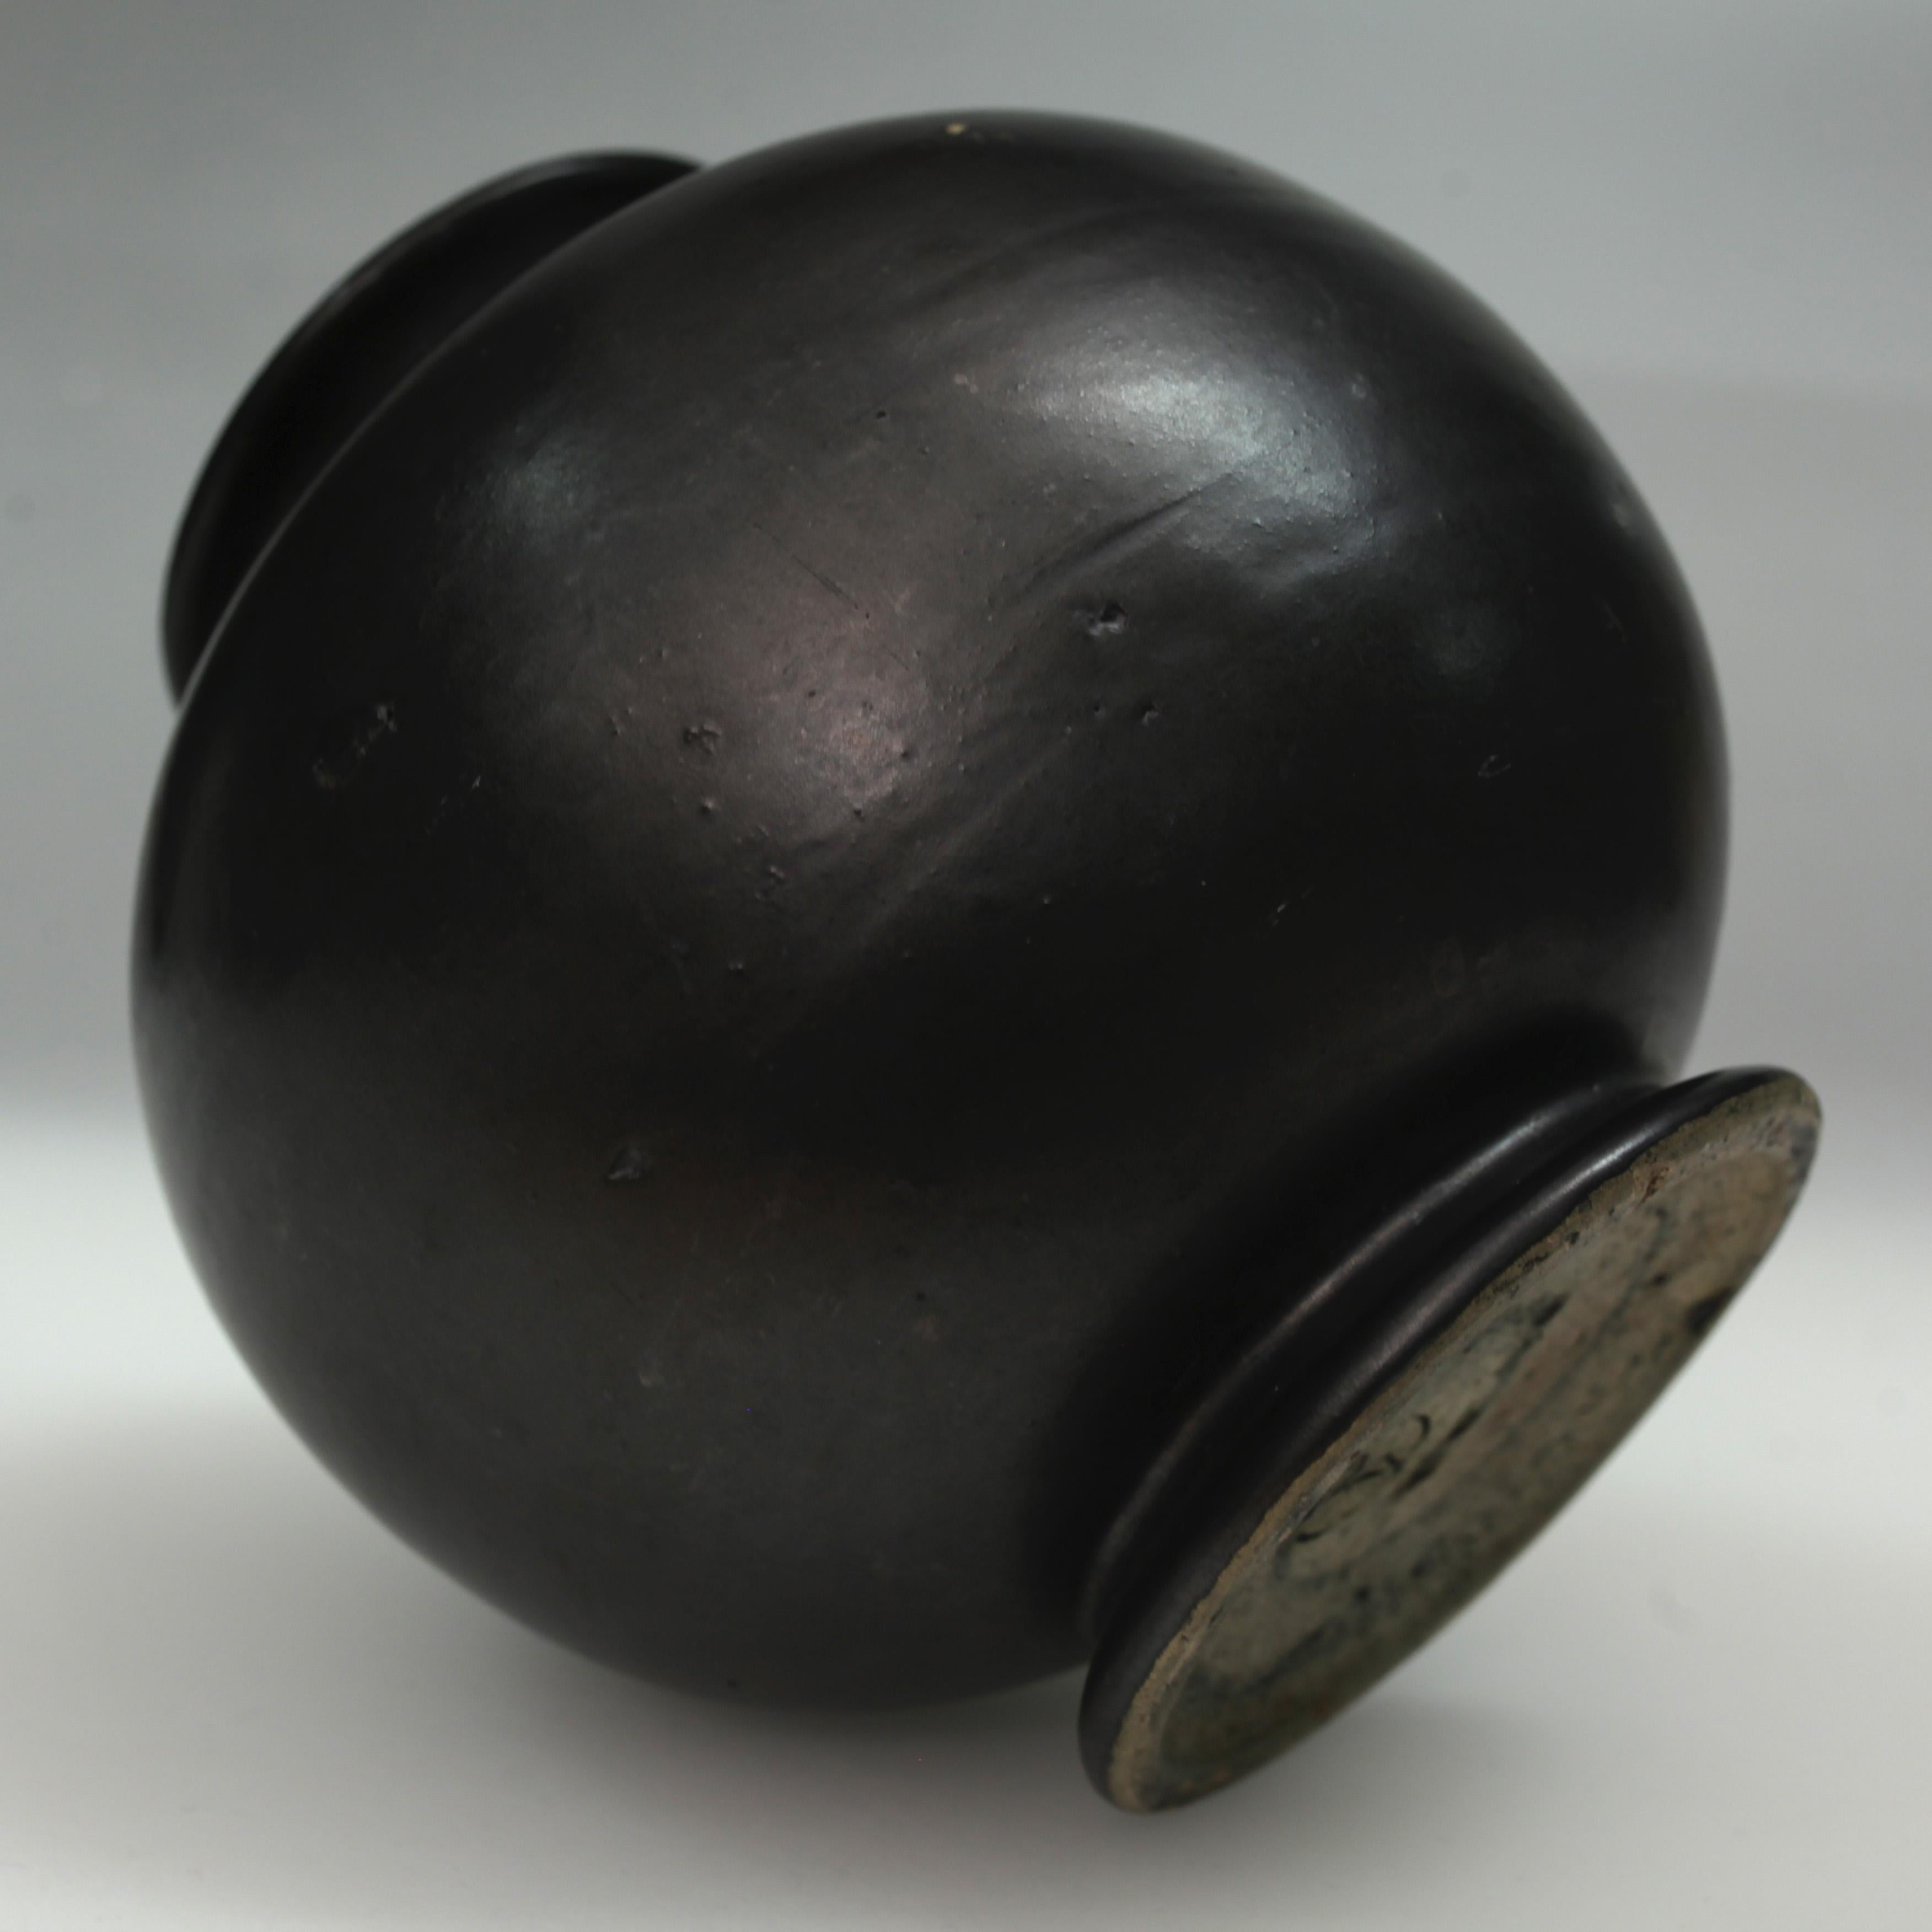 Art Deco vase with a matte black glaze produced by Dutch manufacturer ADCO, circa 1935.